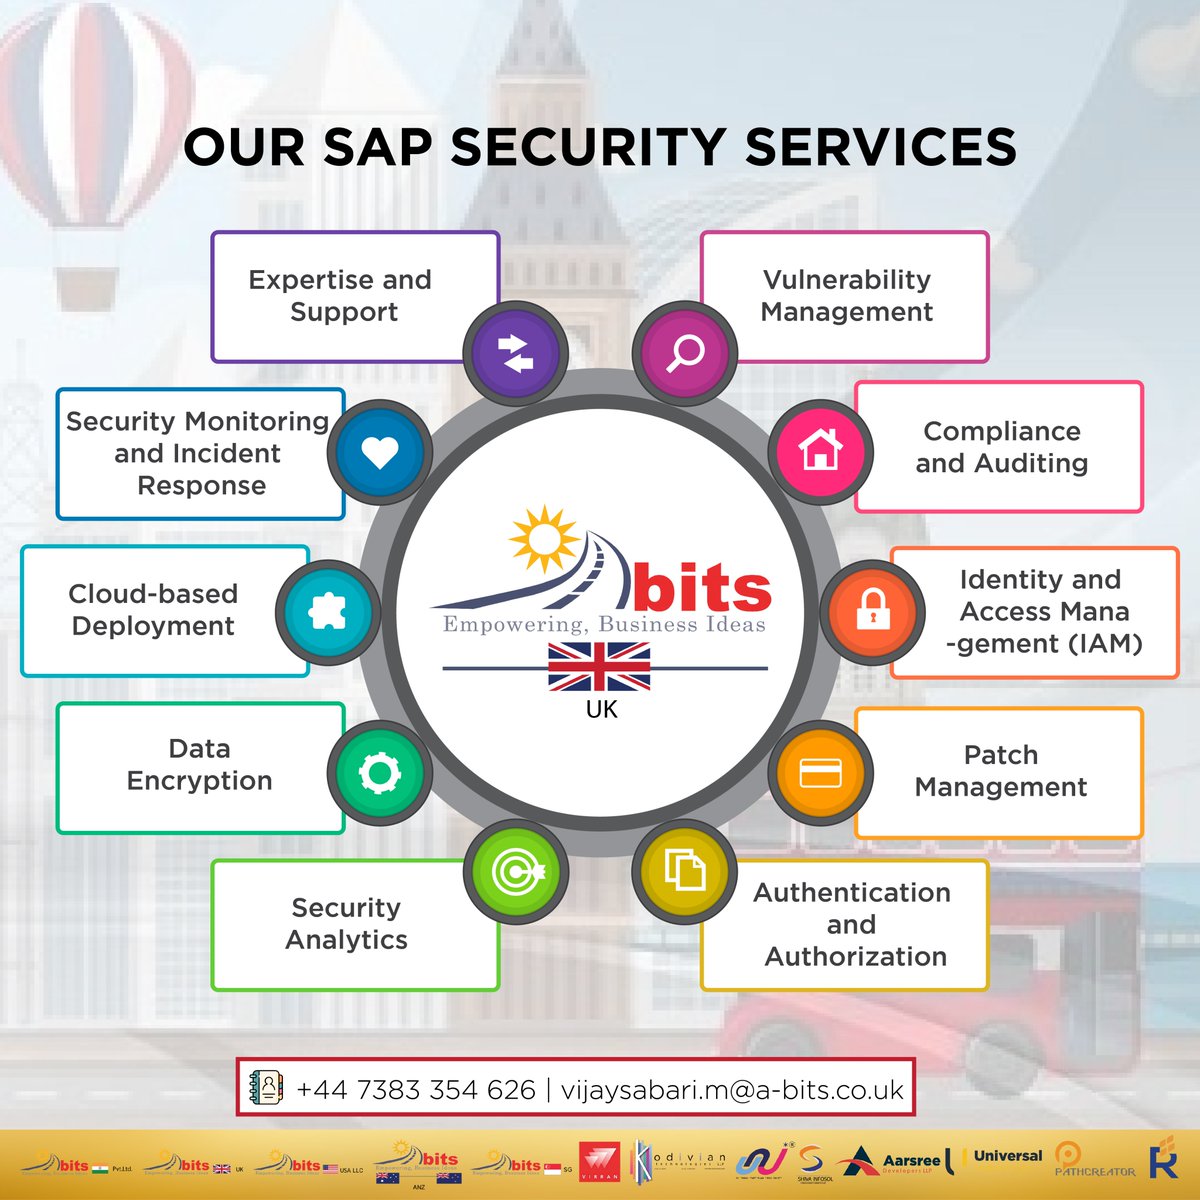 Our SAP Security Services
#abitsuk #ssgroup #ssgroupofcompanies #sap #saphiring #vulnerabilitymanagement #compliance #auditingservices #identityandaccessmanagement #patchmanagement #authentication #authorization #securityanalytics #dataencryption #cloudbasedsolutions